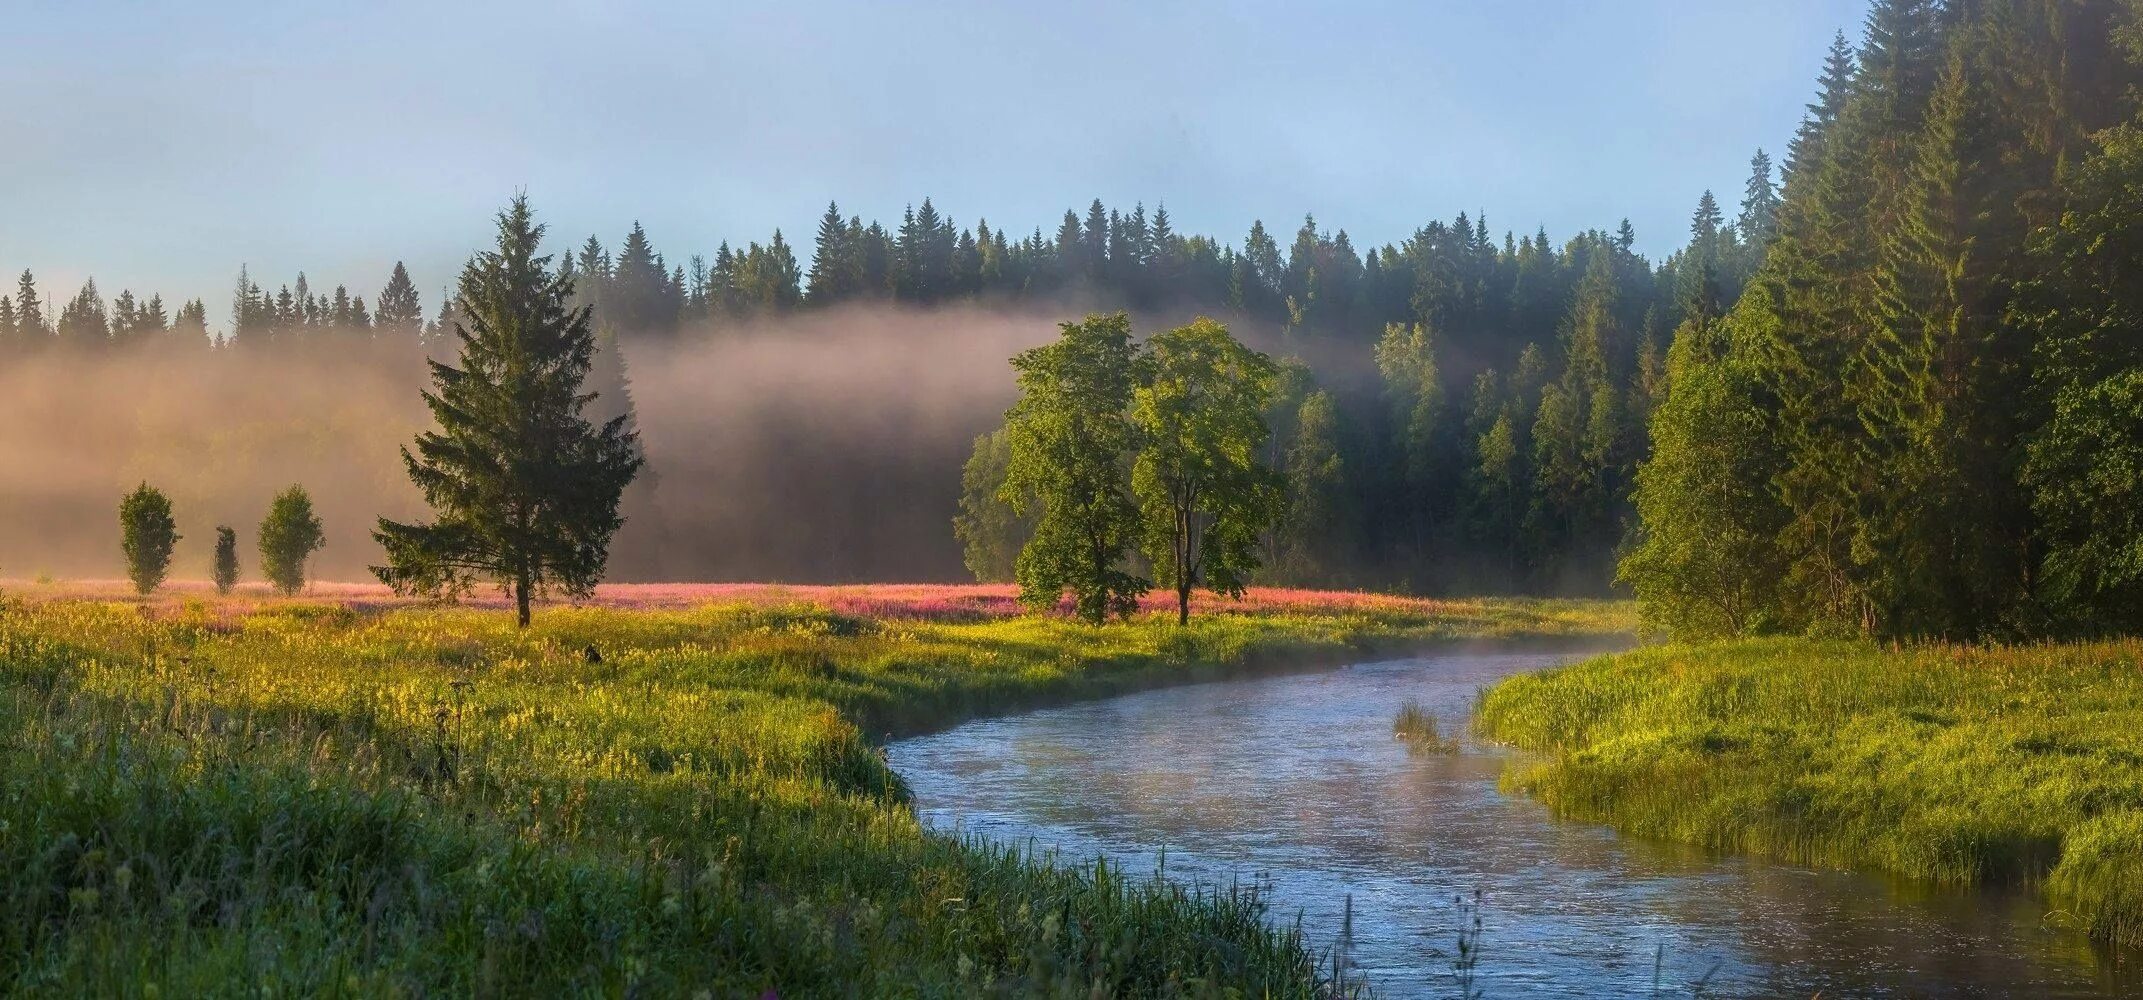 Лужский район лето лес. Фёдор Лашков фотограф река.